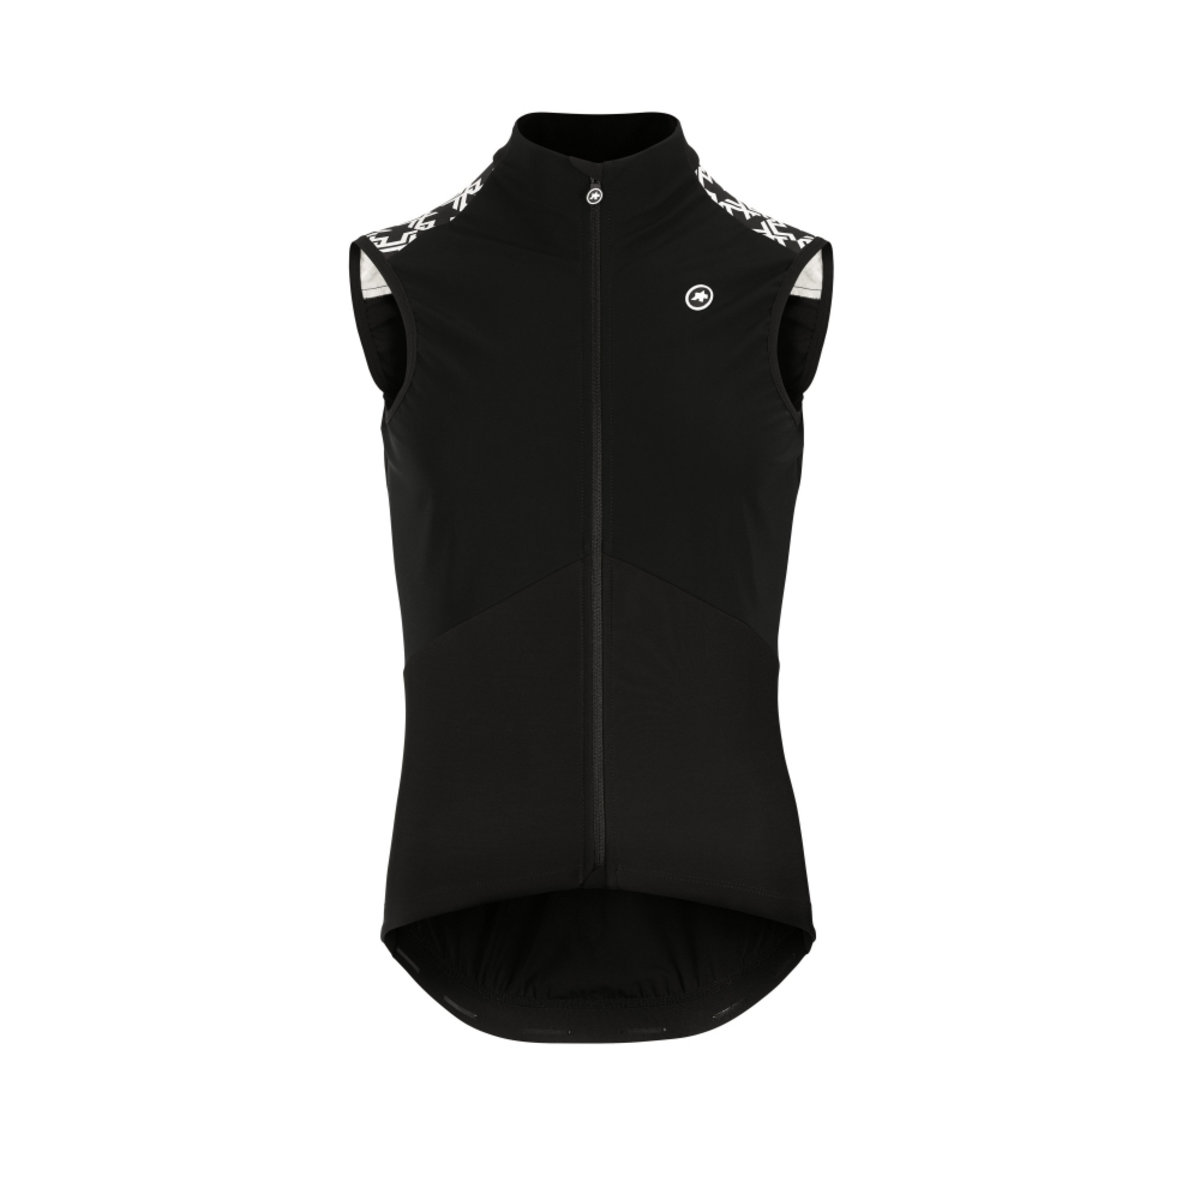 Жилетка ASSOS Mille GT Spring Fall Airblock Vest Black Series, мужская, черная с белым, S фото 